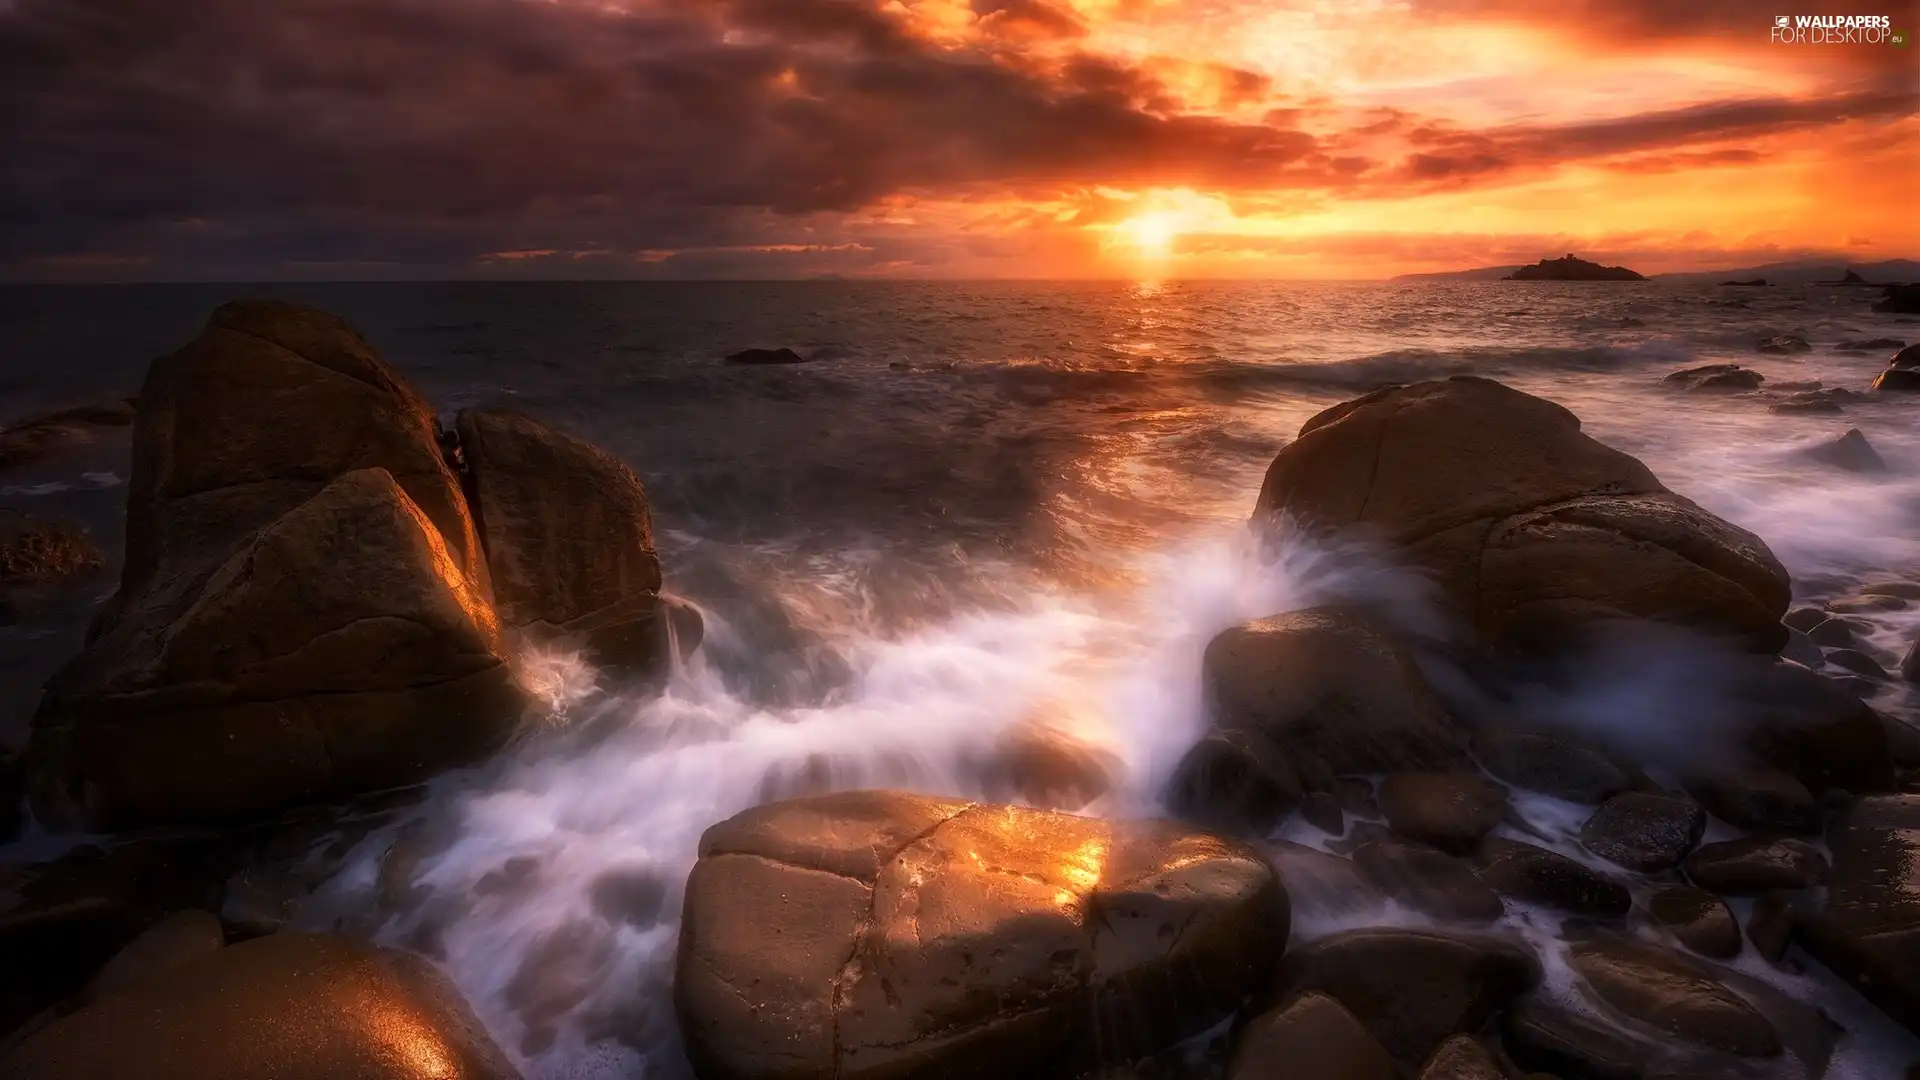 Stones, sea, Great Sunsets